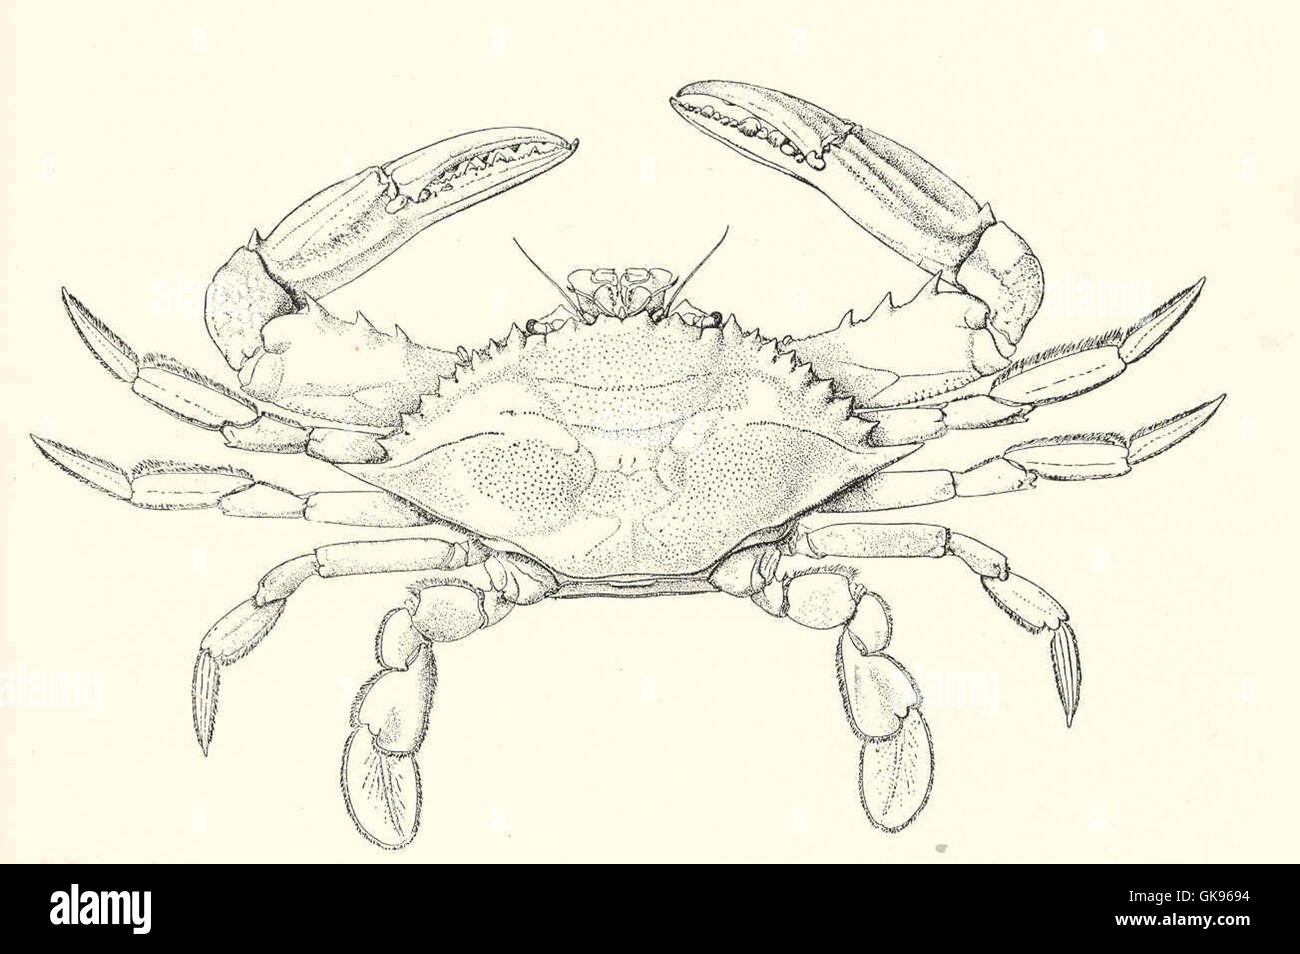 43002 Common Edible or Blue Crab (Callinectes hastatus) Stock Photo